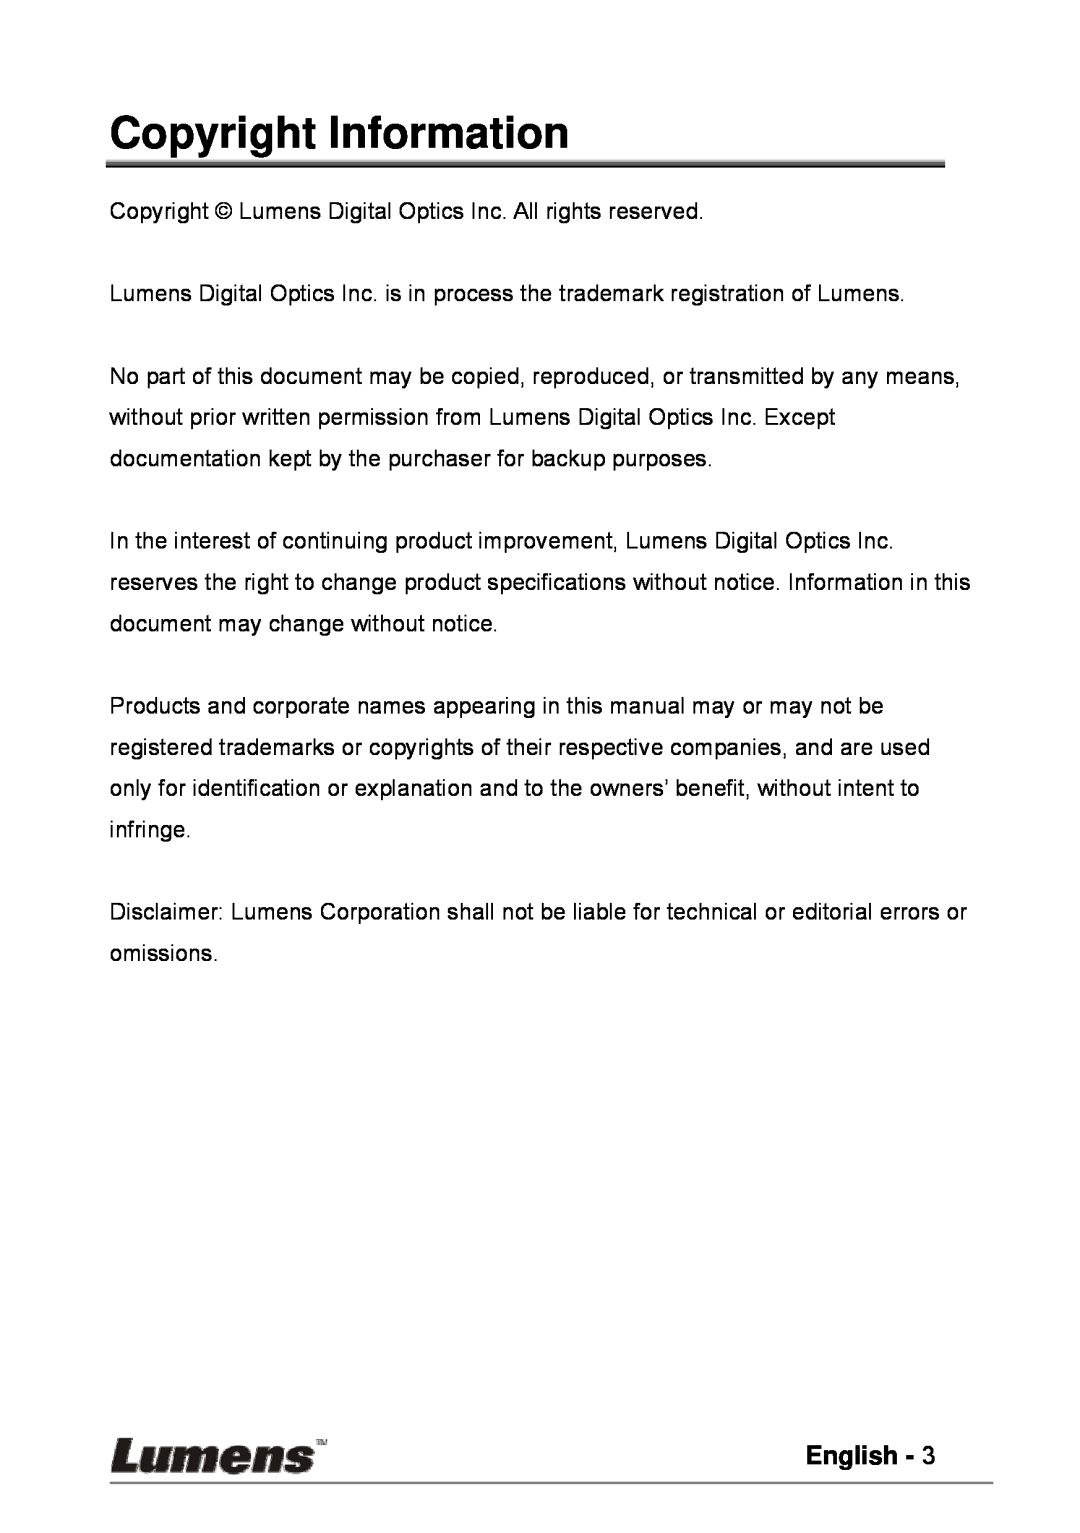 Lumens Technology PS600 user manual Copyright Information, English 